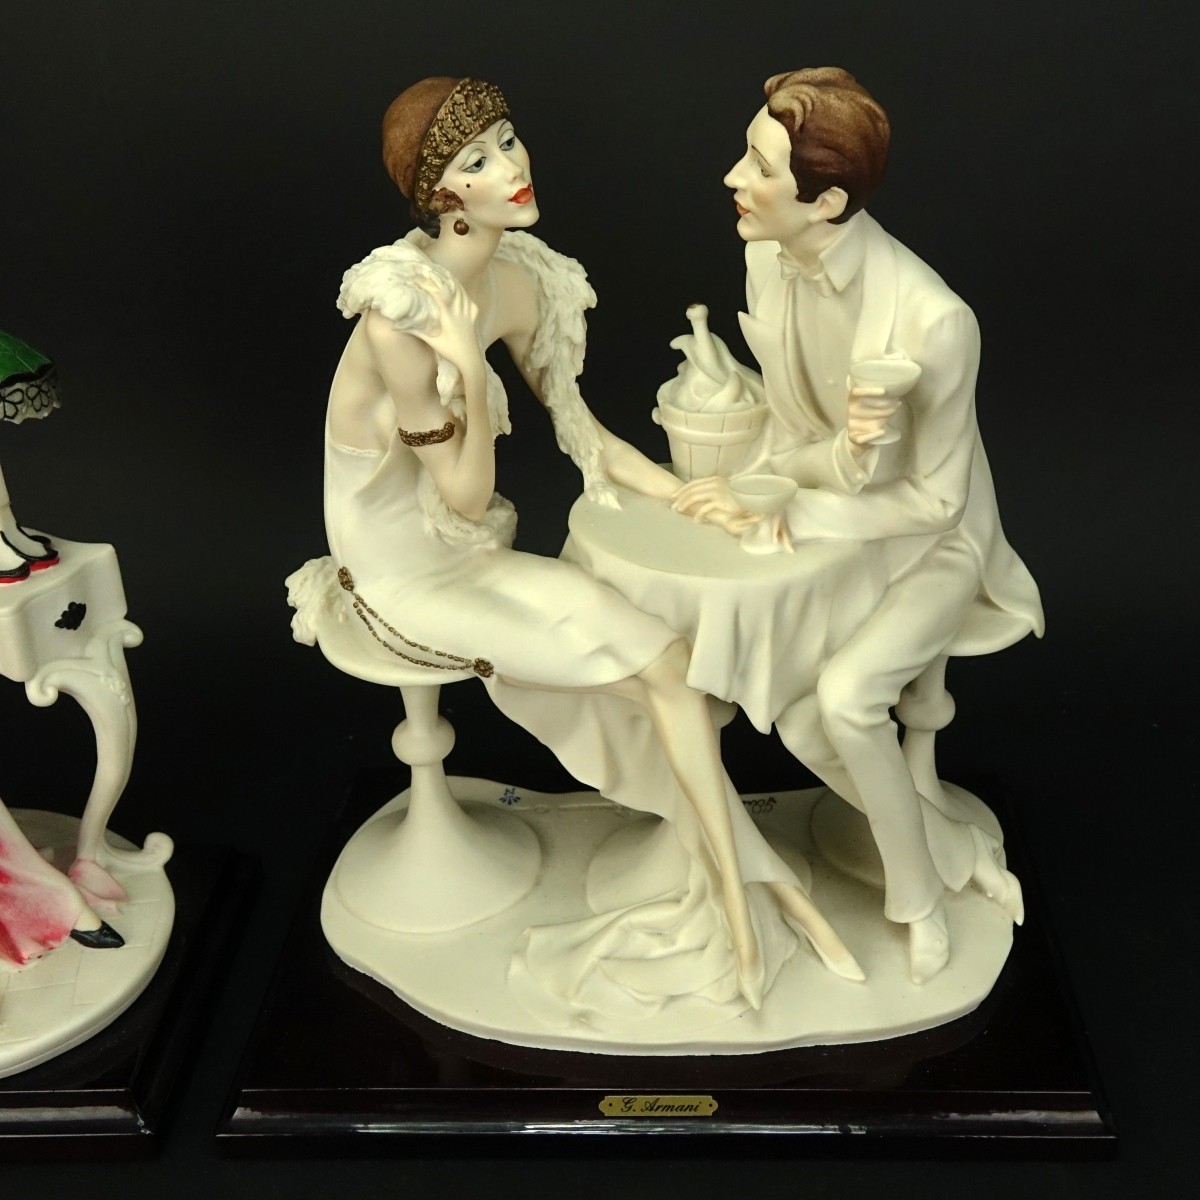 Two (2) Giuseppe Armani Polychrome Figurines